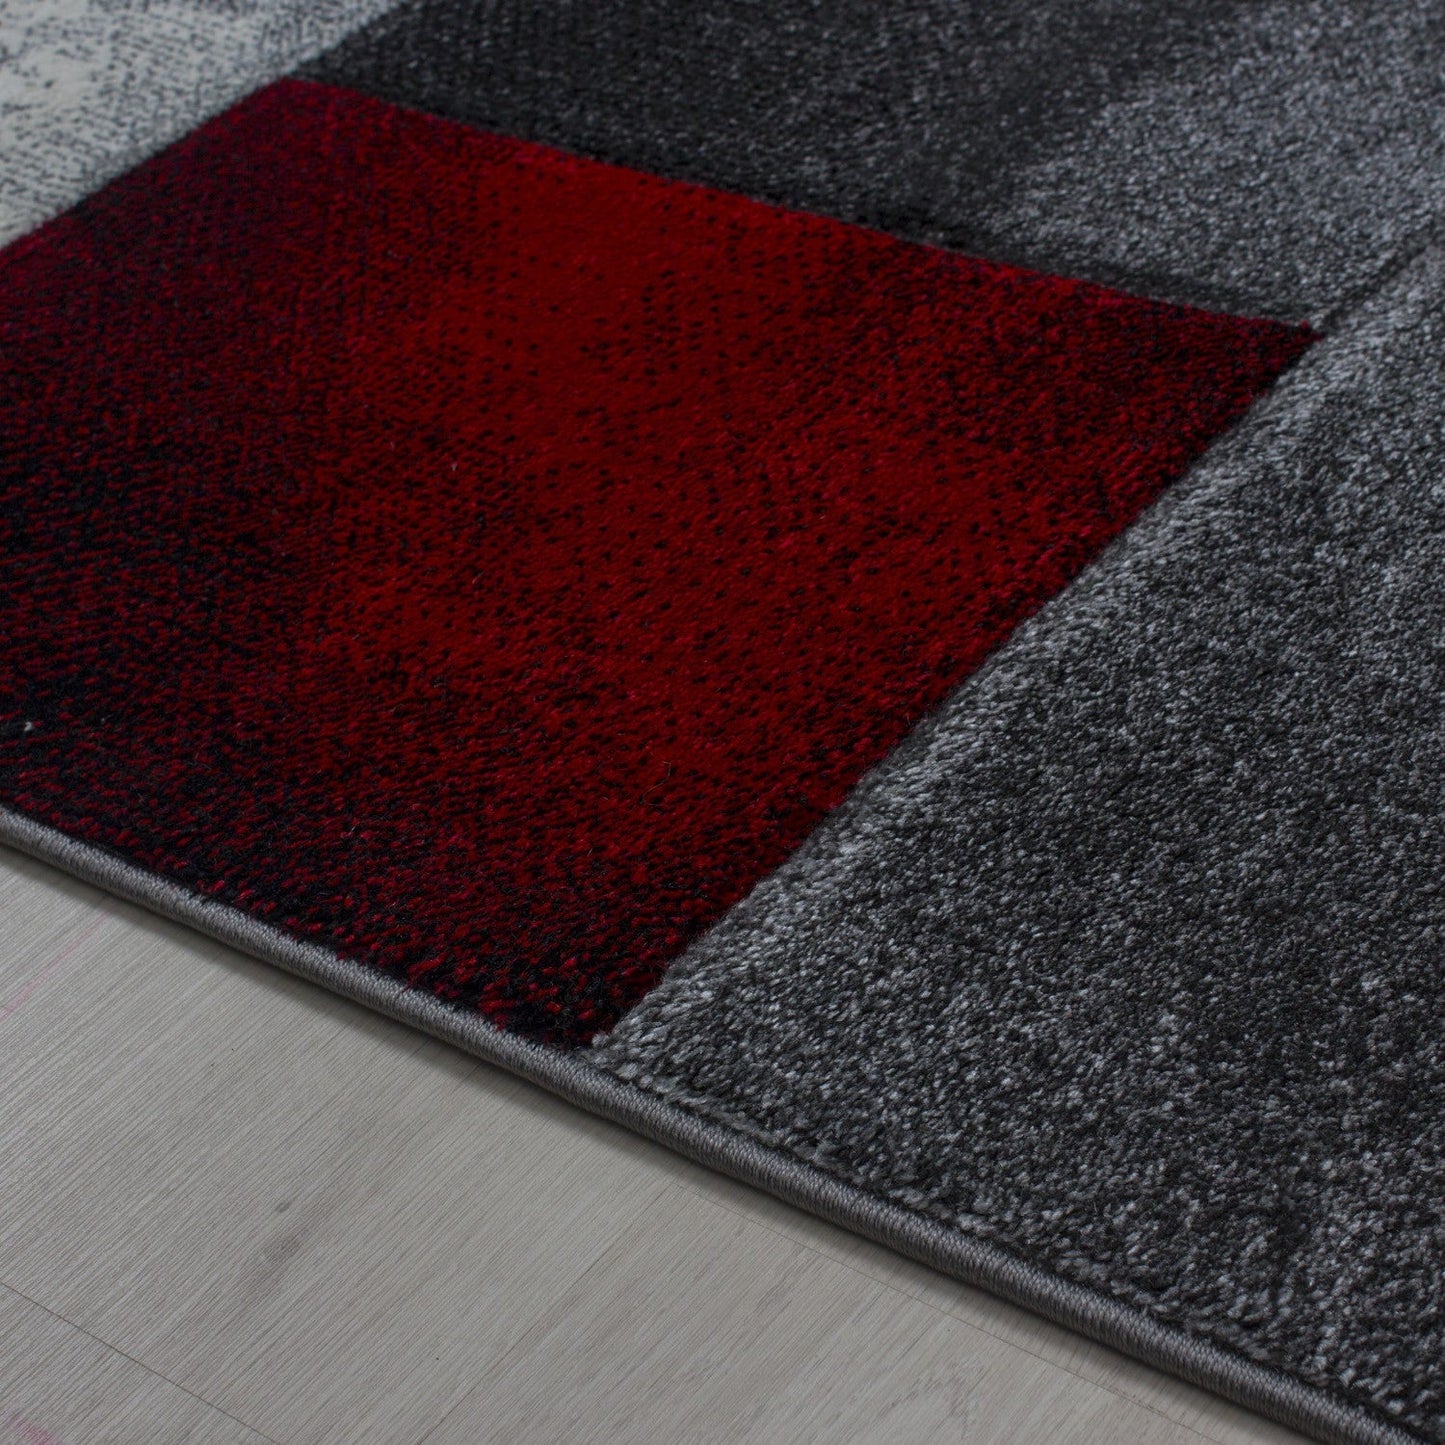 Designer Teppich Modern Kariert Muster Konturenschnitt Schwarz Grau Rot